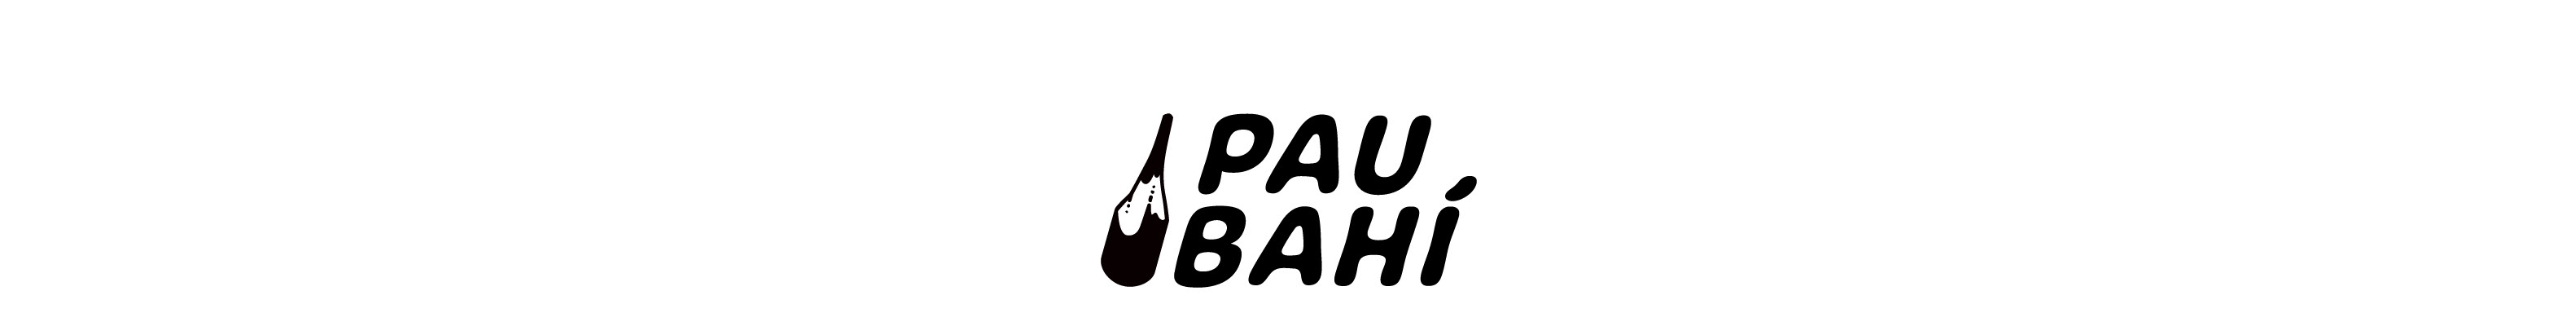 Pau Bahí Segura's profile banner